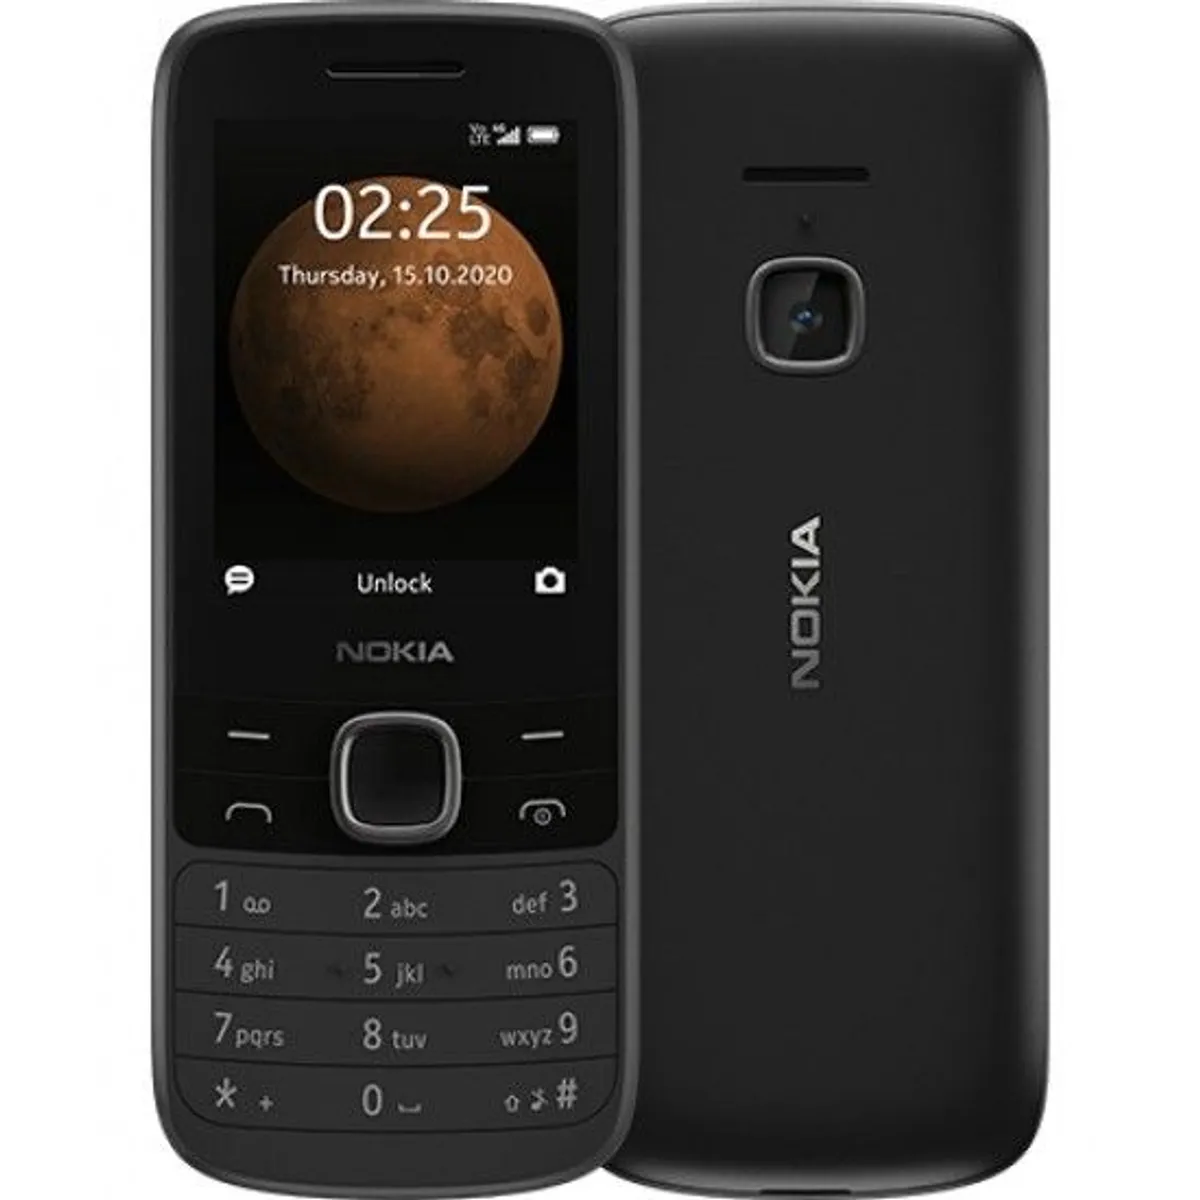 Nokia 225 Dual SIM Unlocked Phones - Black - Image 1